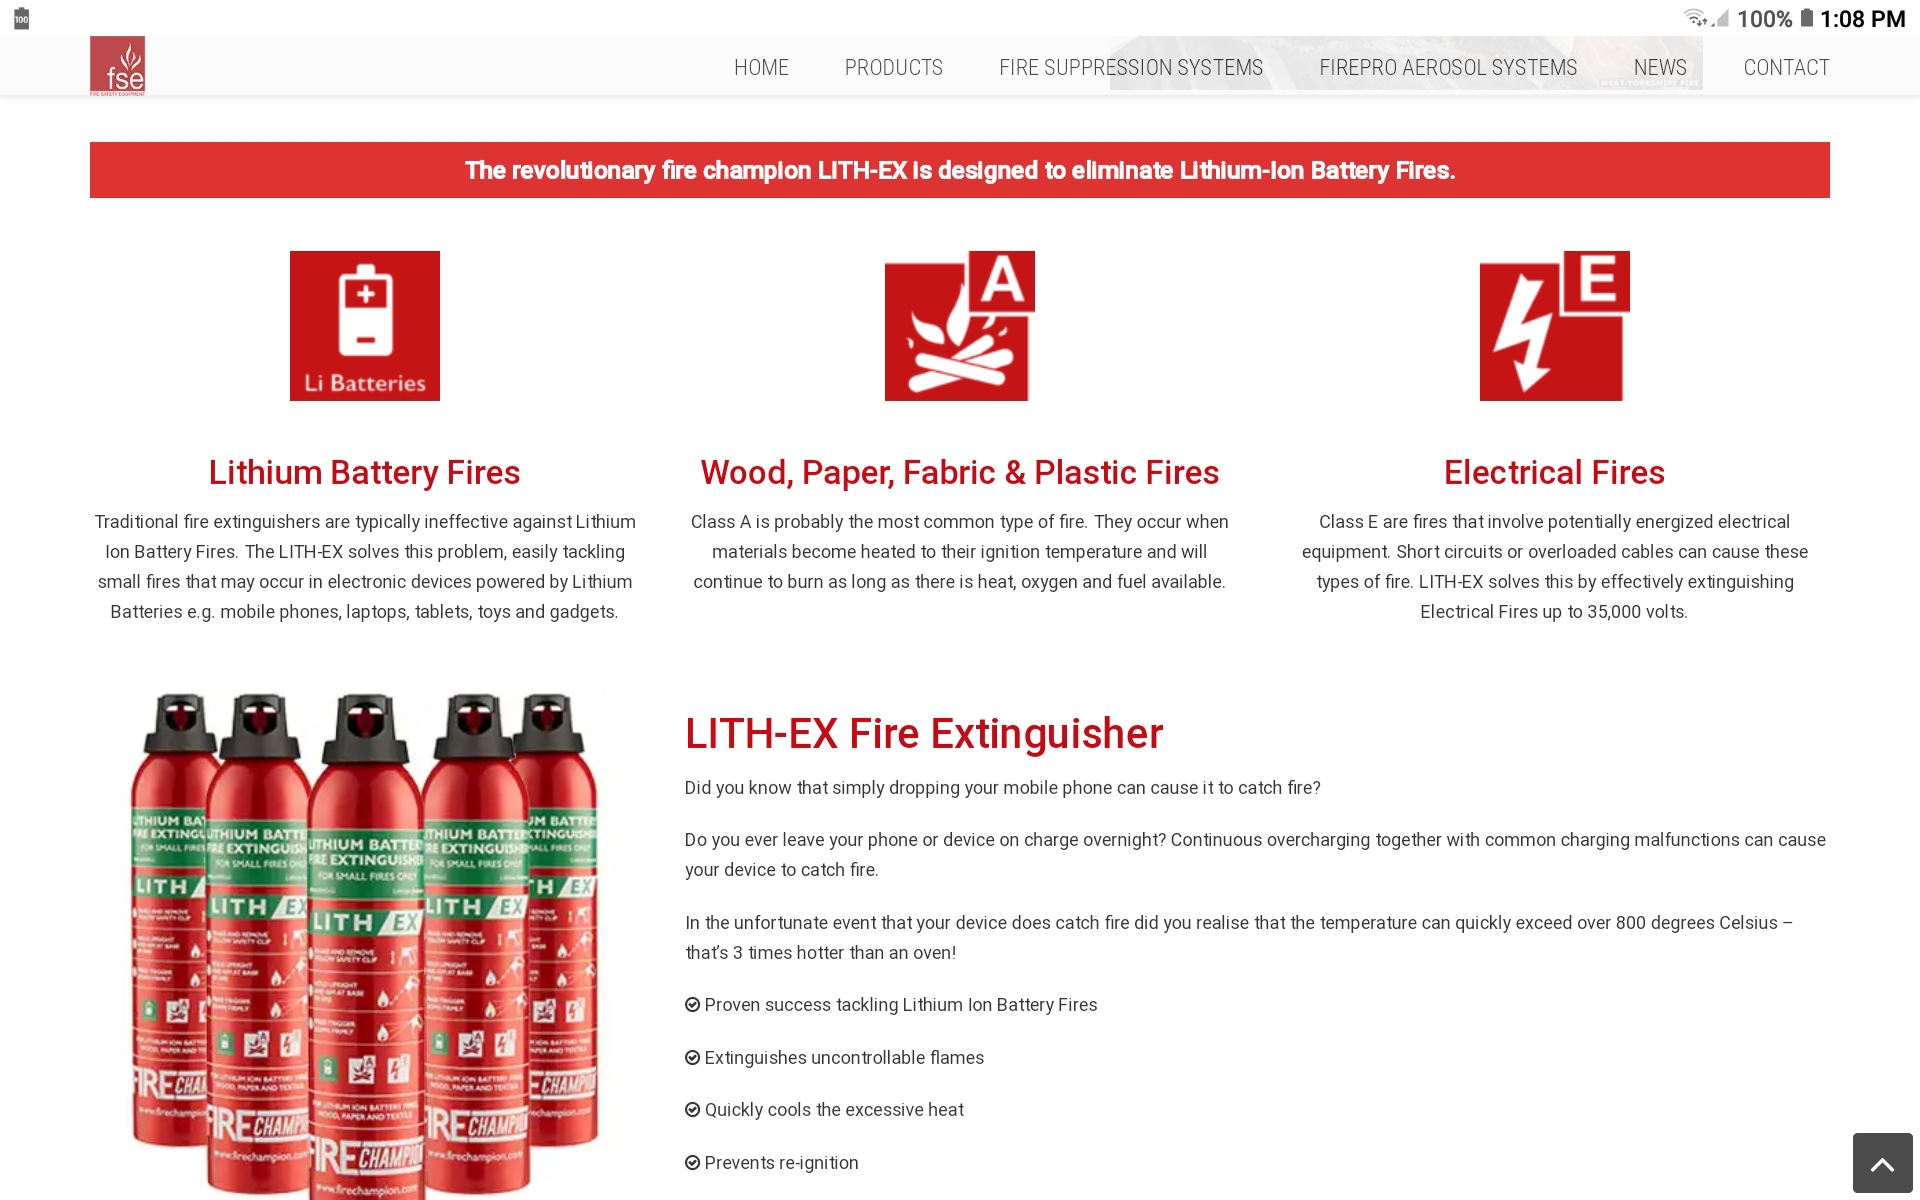 Vernederen opslag Werkloos Fire Extinguisher for Lithium Ion Batteries | DJI Phantom Drone Forum